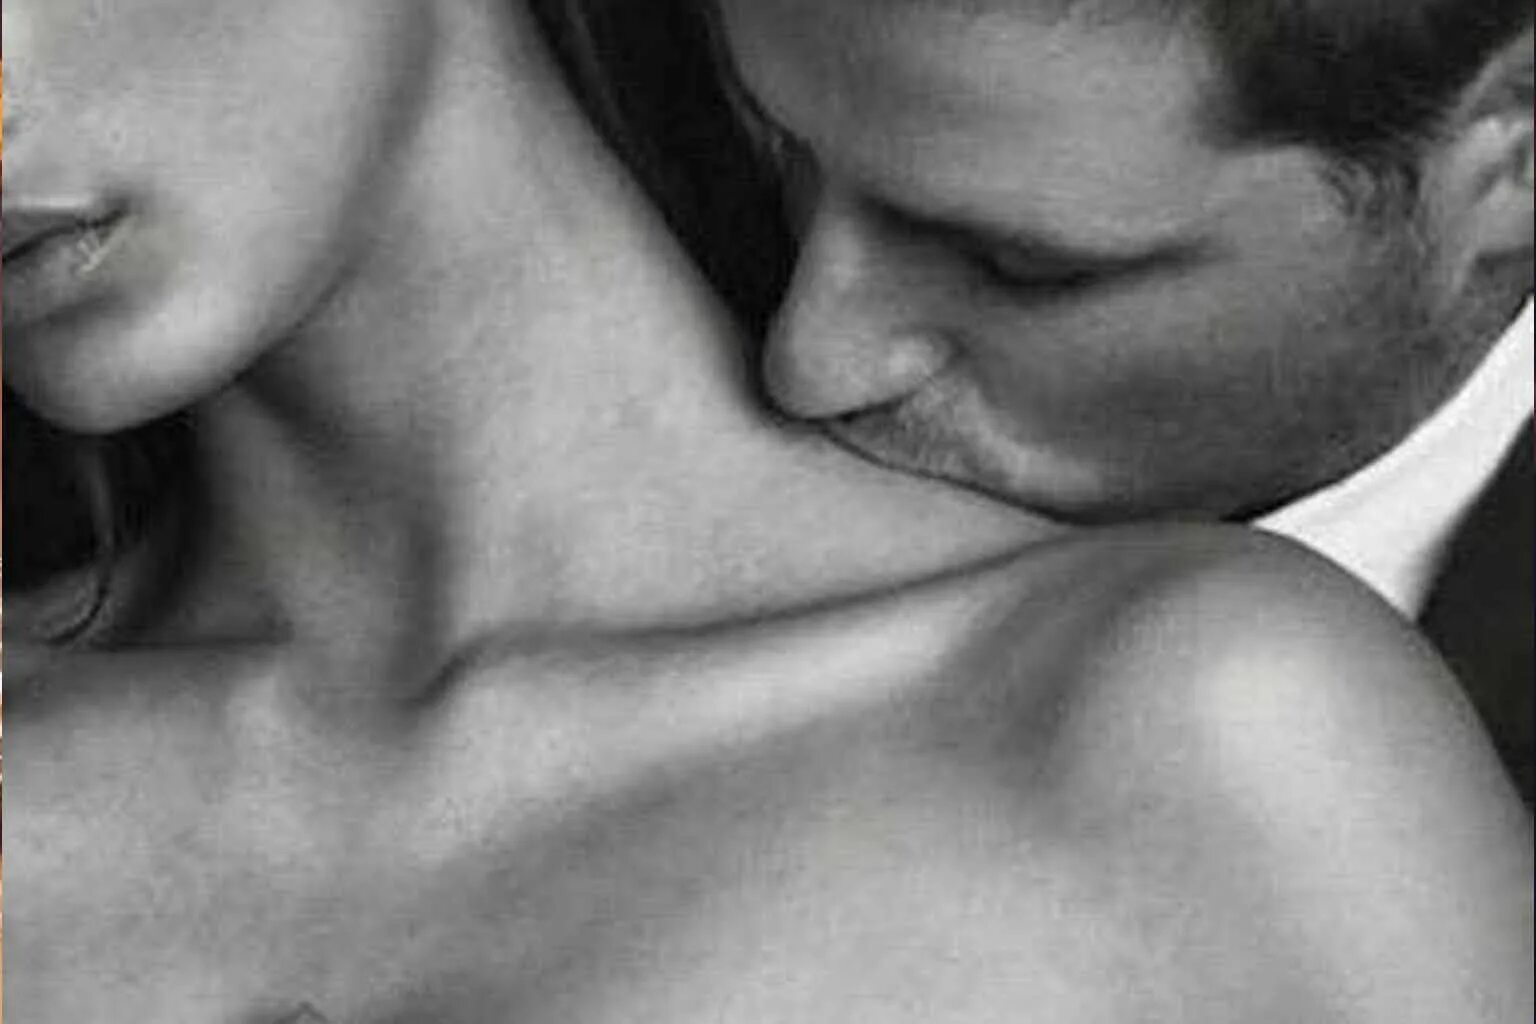 Sensual vk. Поцелуй в шею. Поцелуй в плечо. Нежный поцелуй в шею. Нежный поцелуй в плечо.